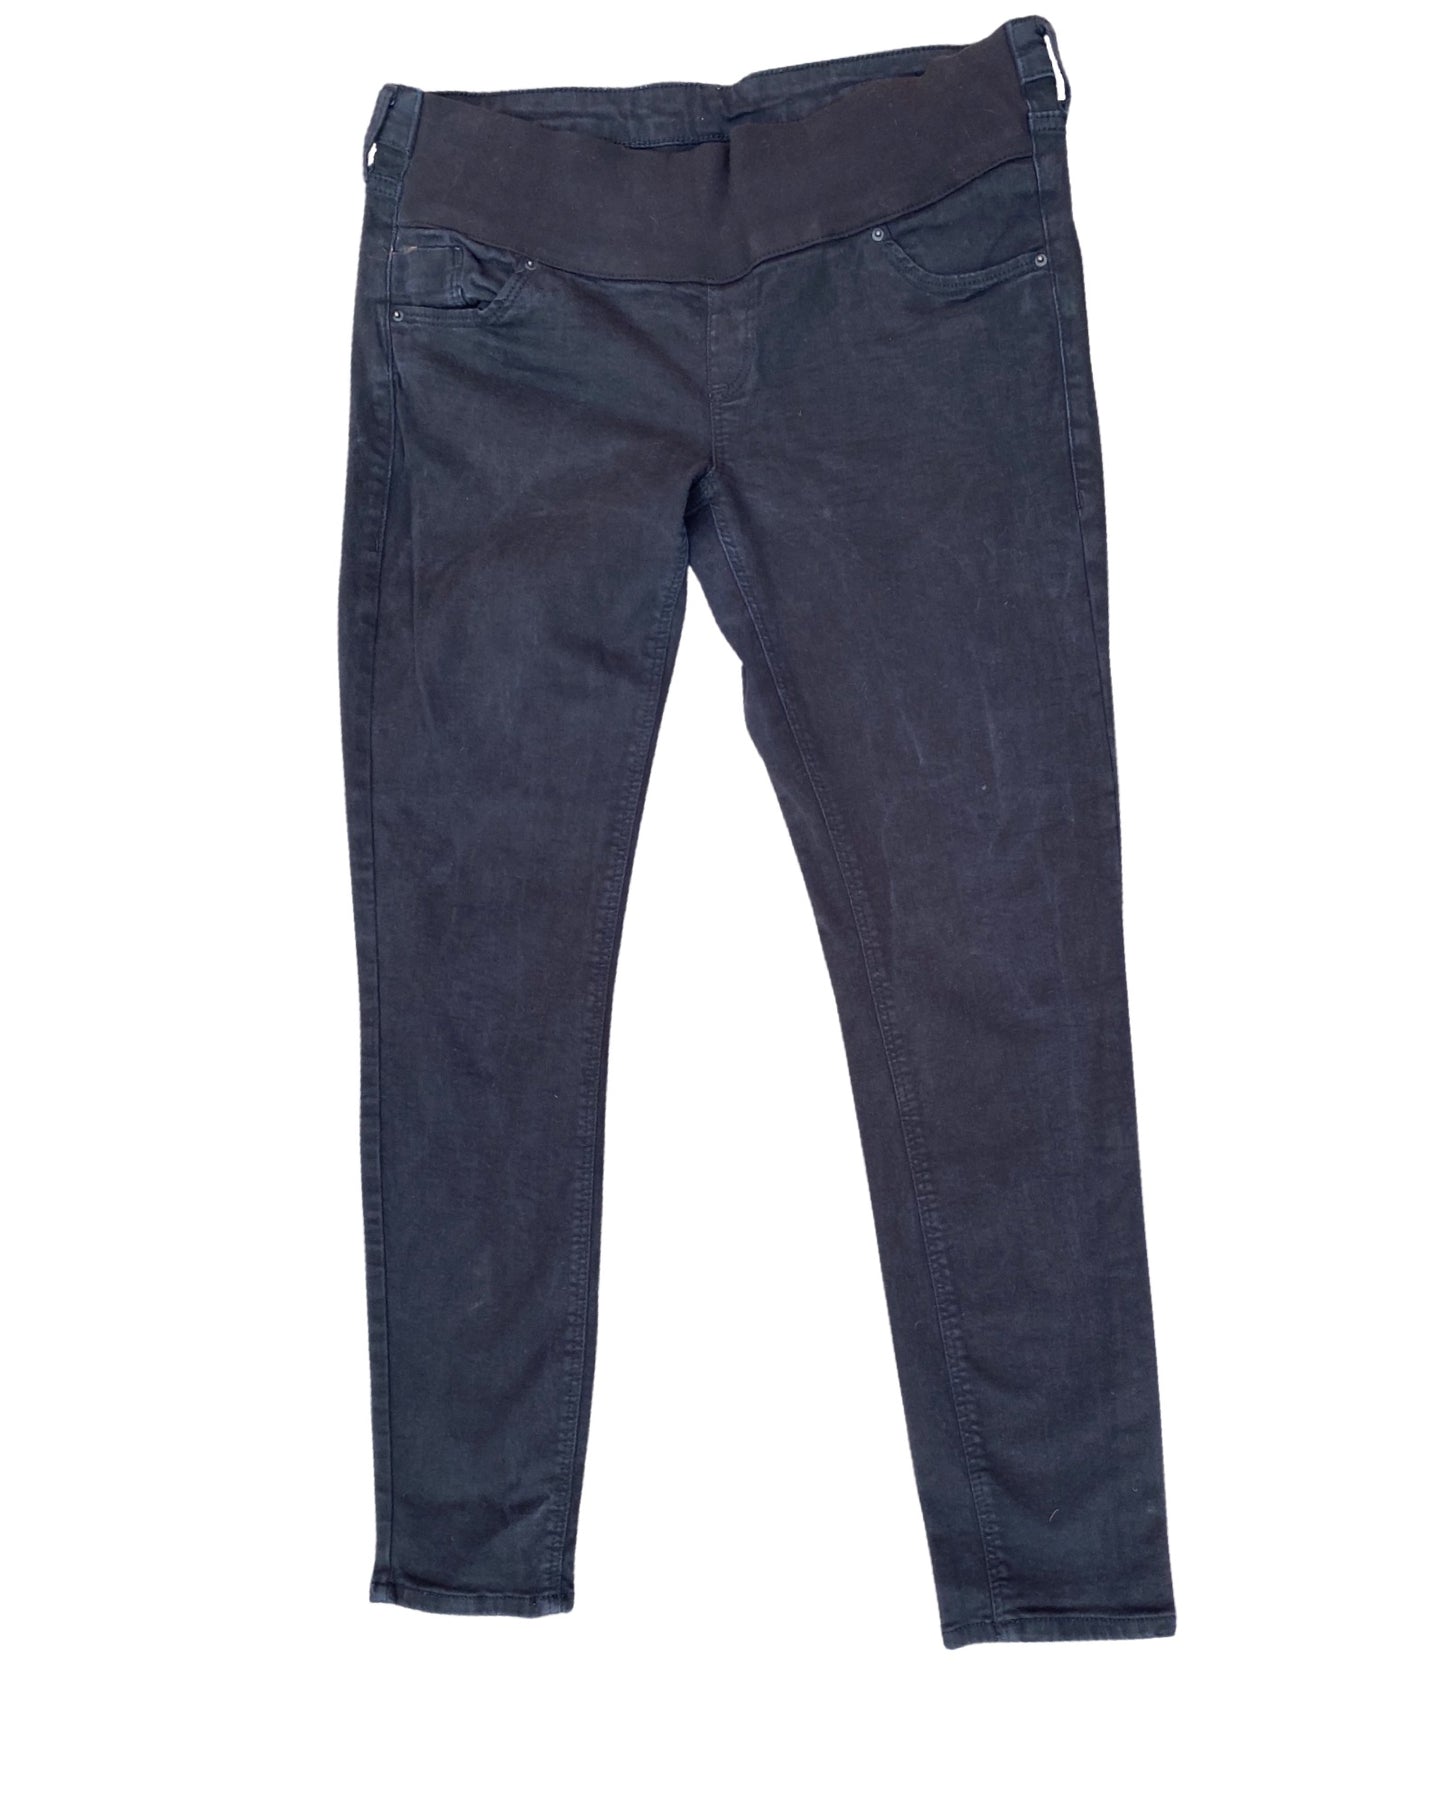 Topshop maternity jamie jeans in black (size 10)